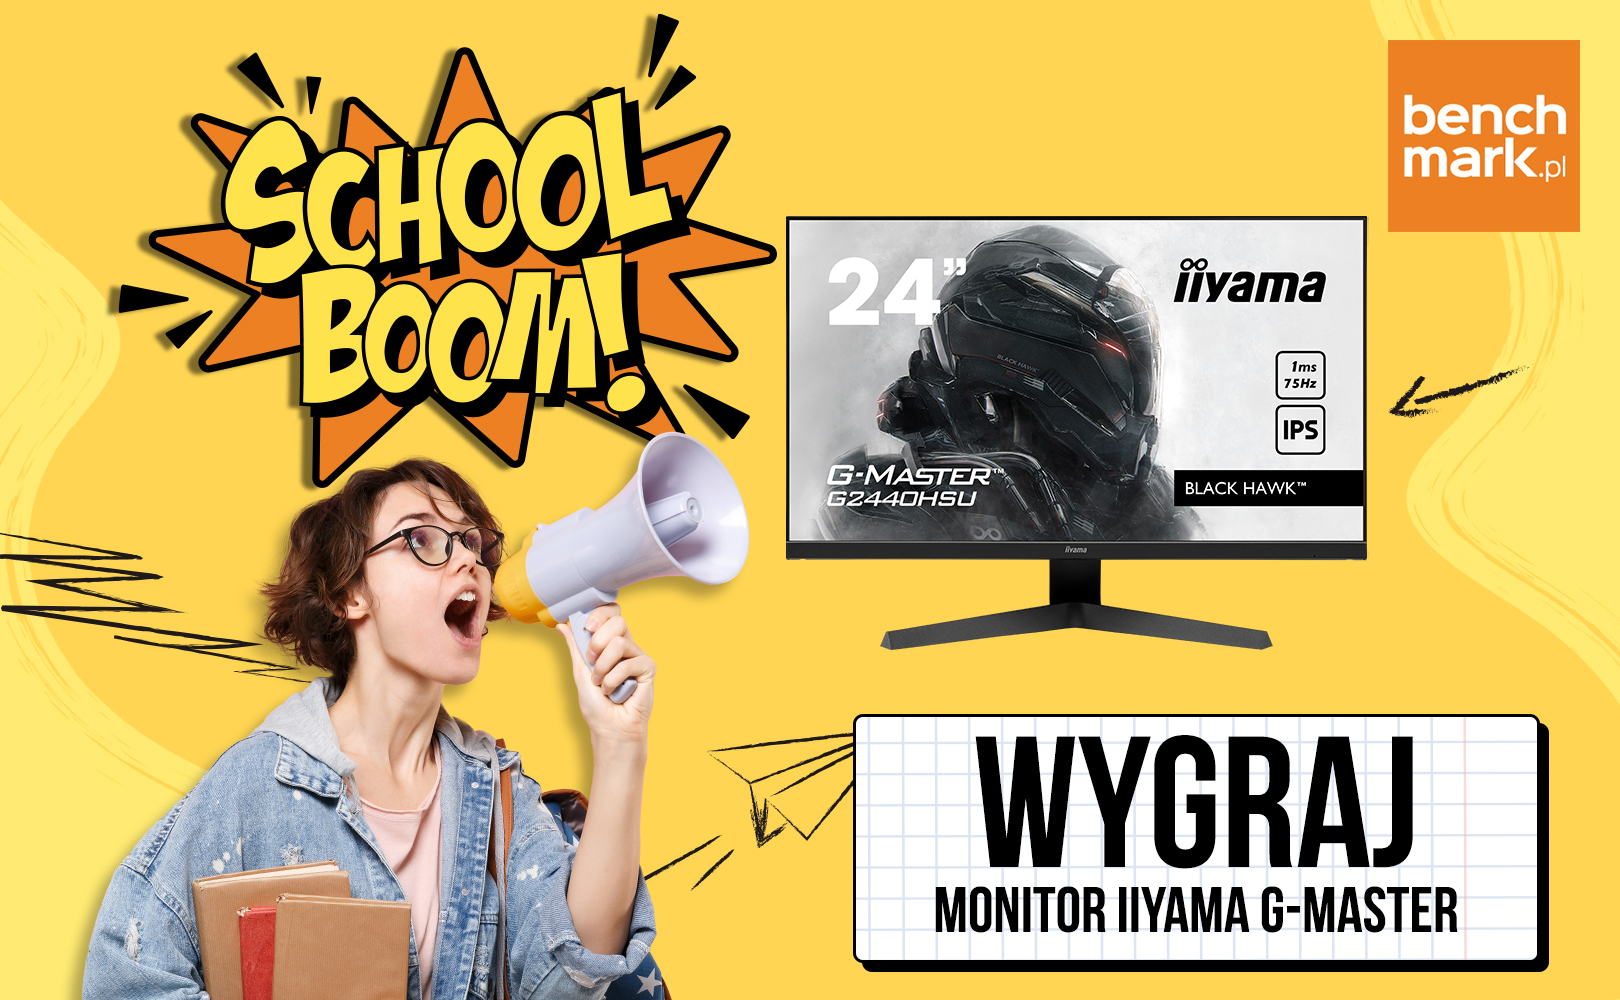 SchoolBoom2021 - wygraj monitor iiyama G-Master